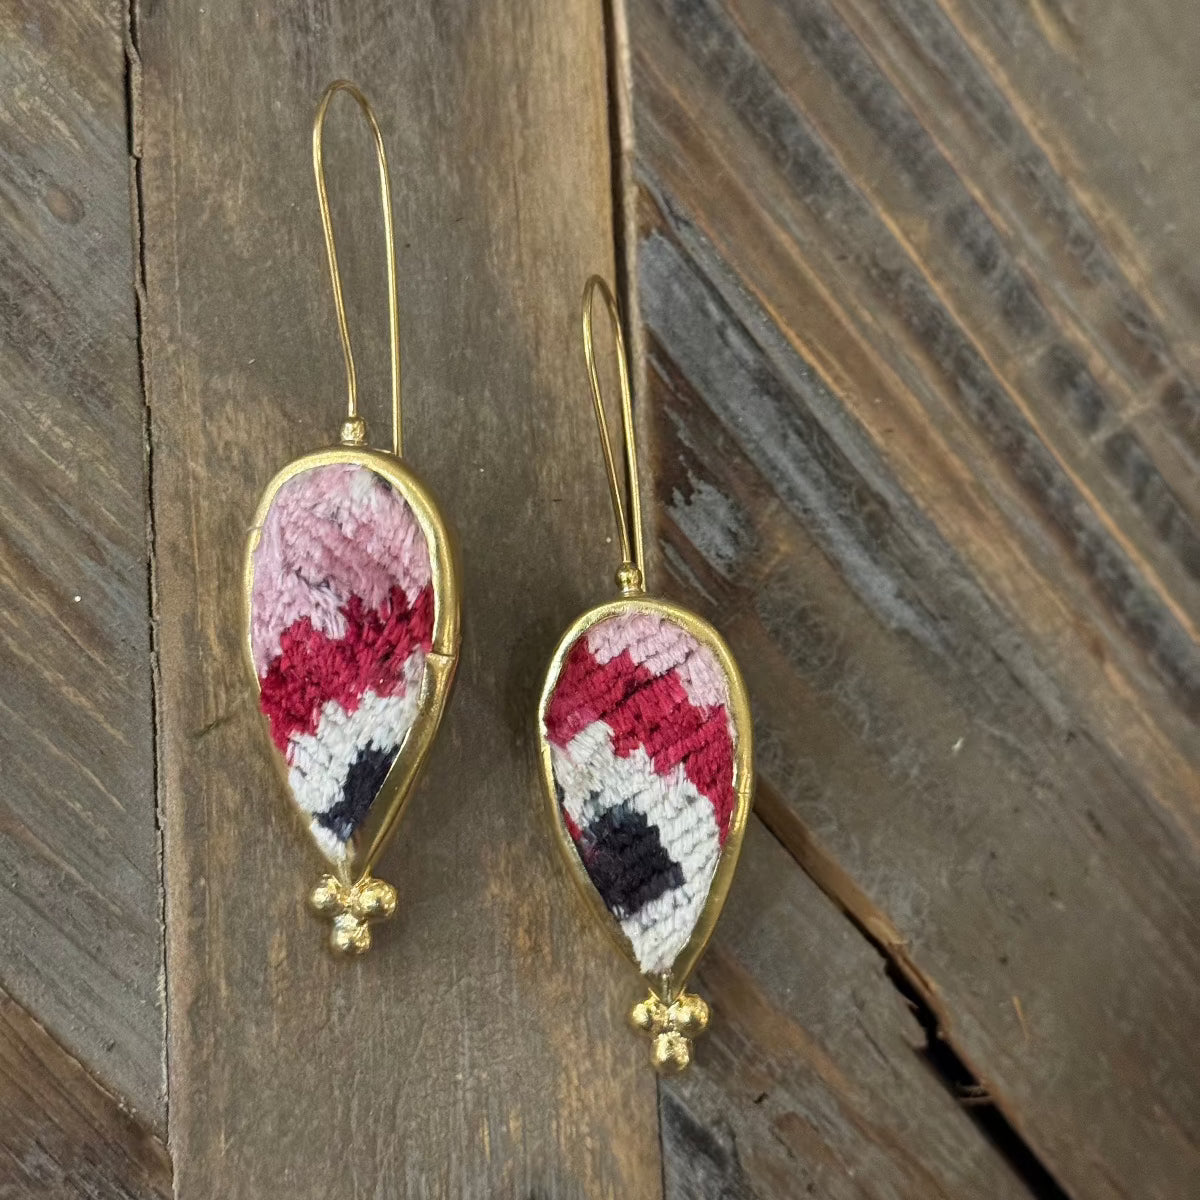 Hand Crafted Ottoman Vintage Textile Earrings - Teardrop New Jewelry Eyup Gunduz A 